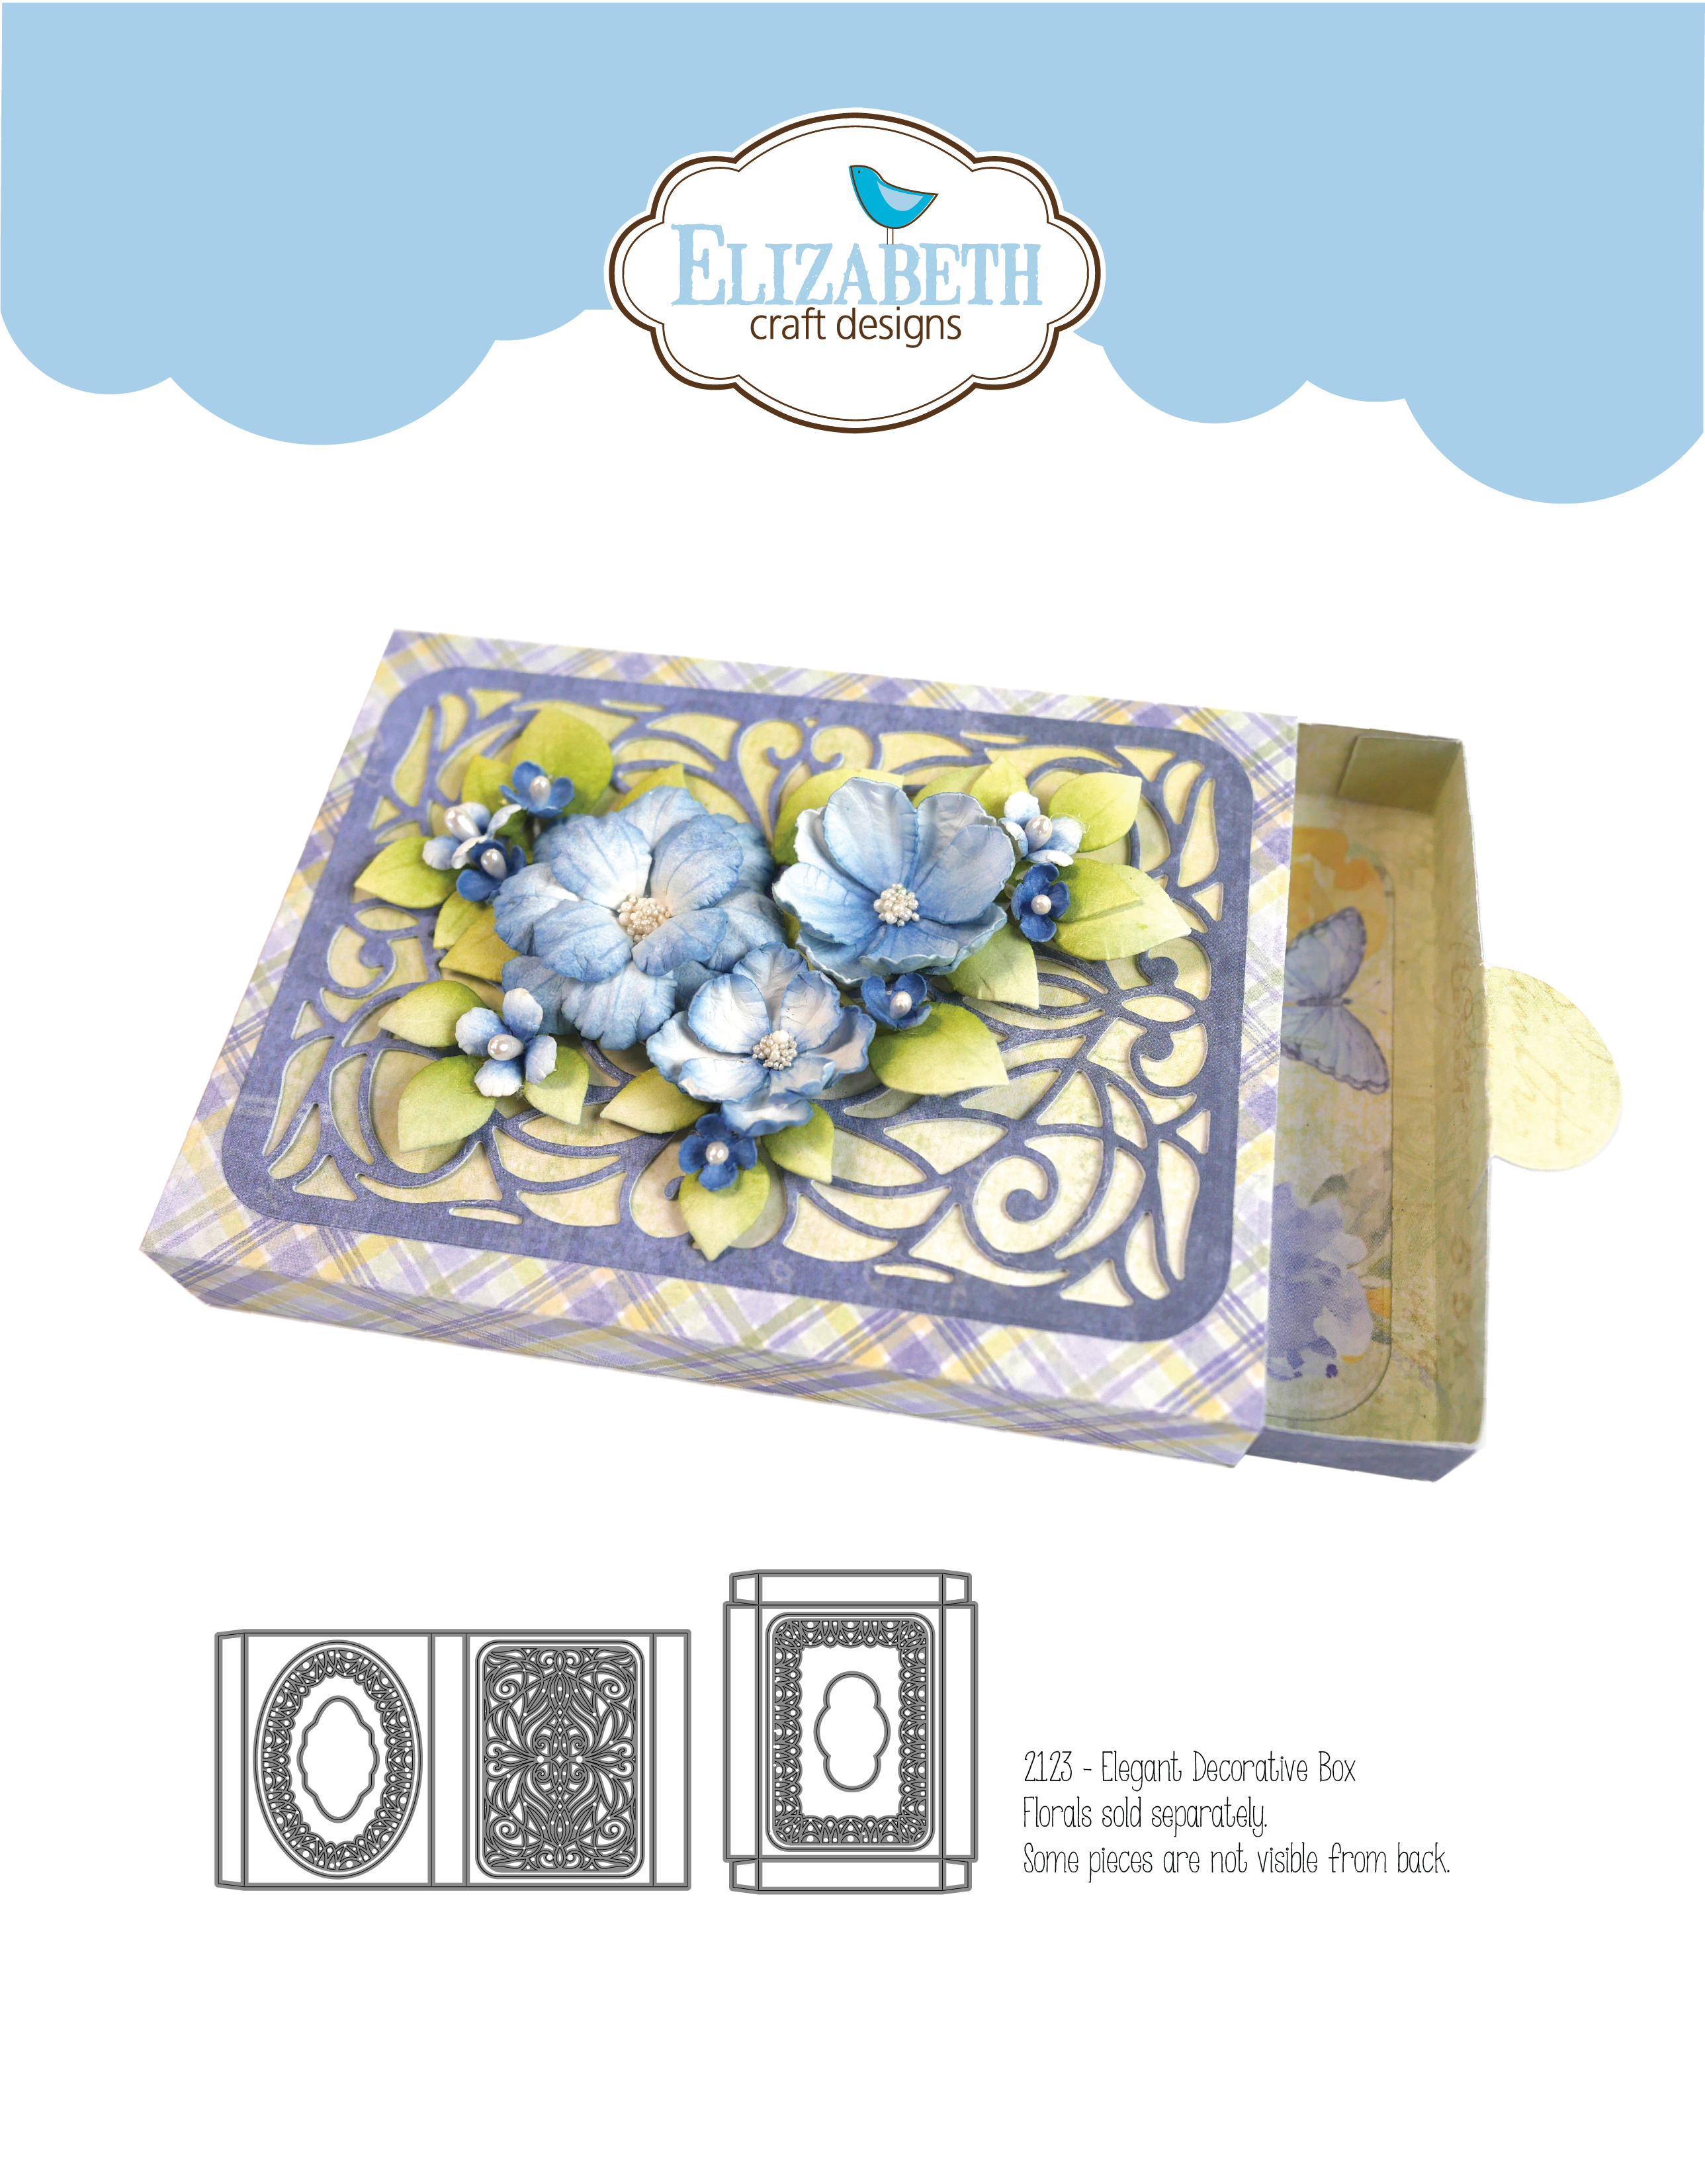 Elegant Decorative Box